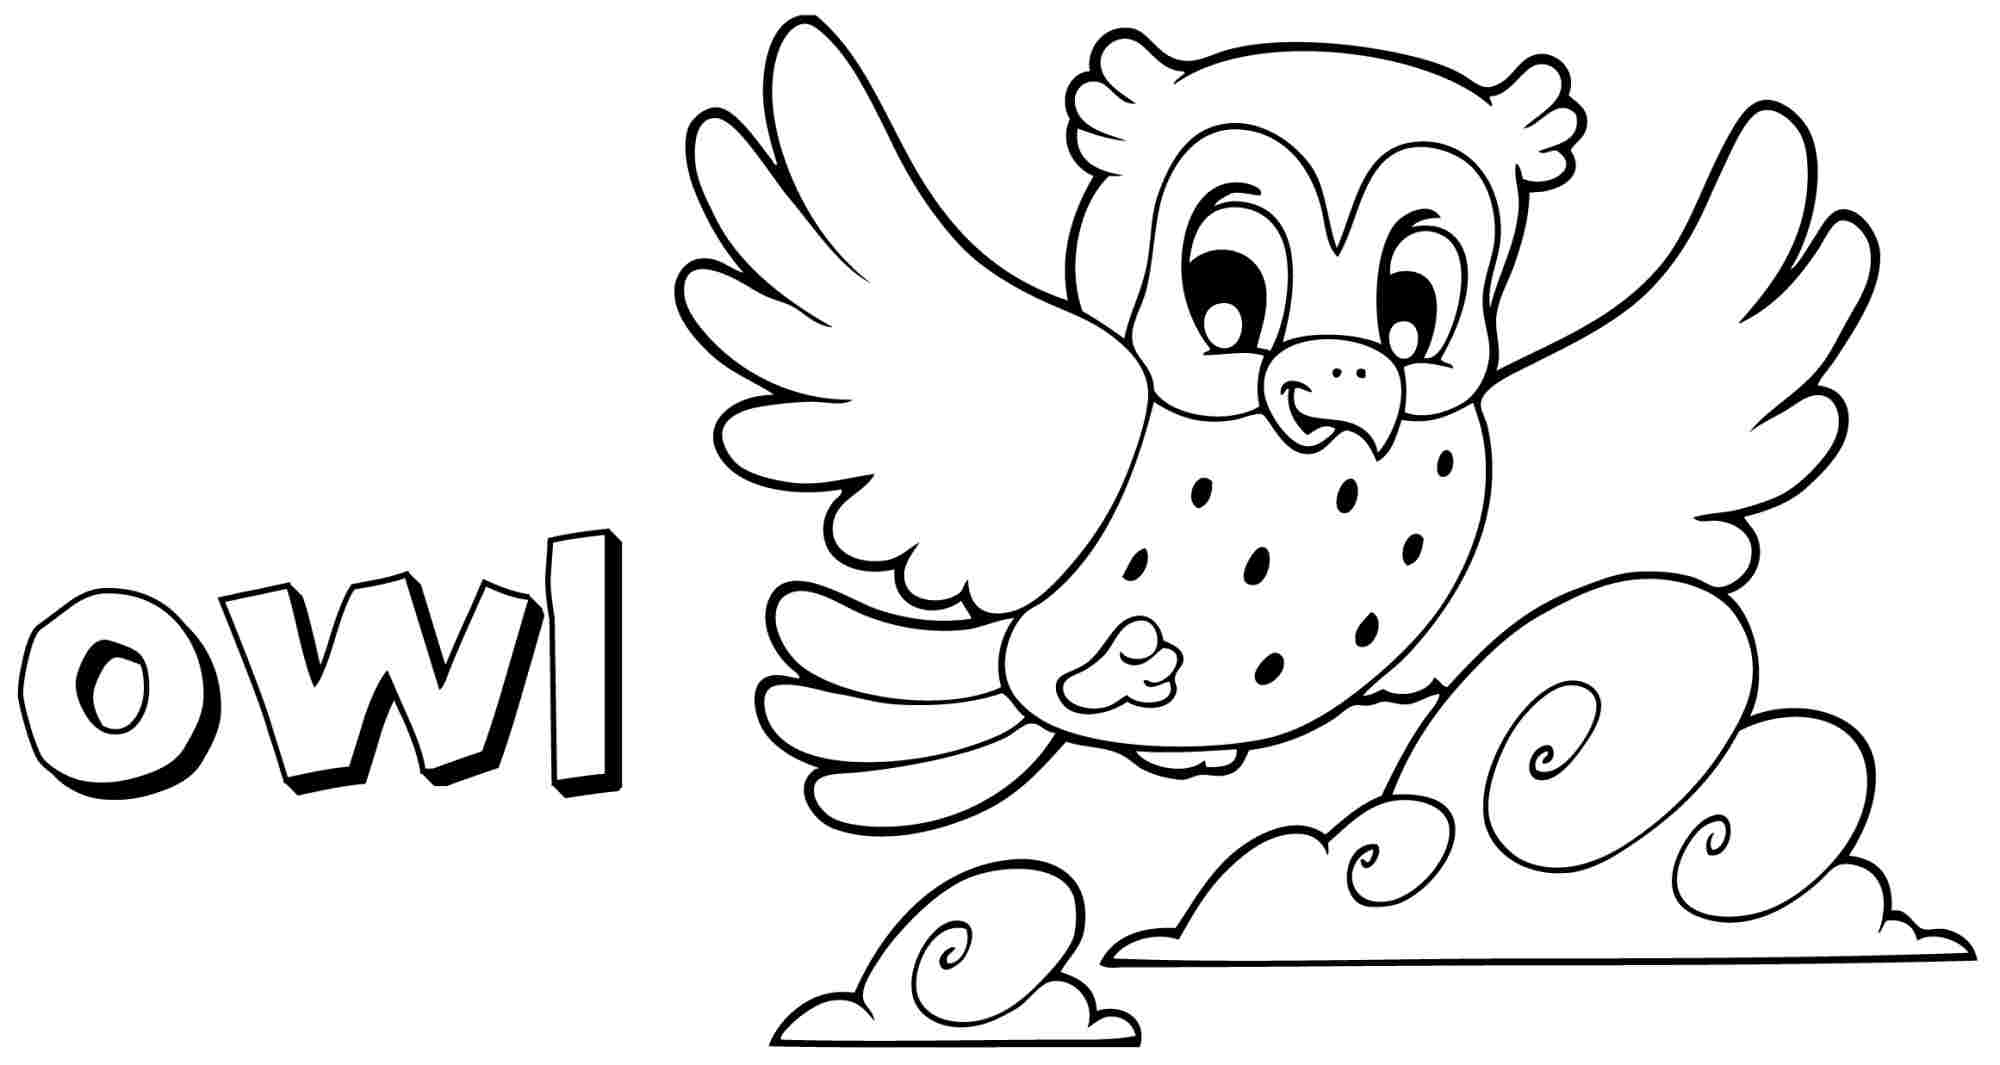 Free Owl Coloring Pages Image 21 - VoteForVerde.com